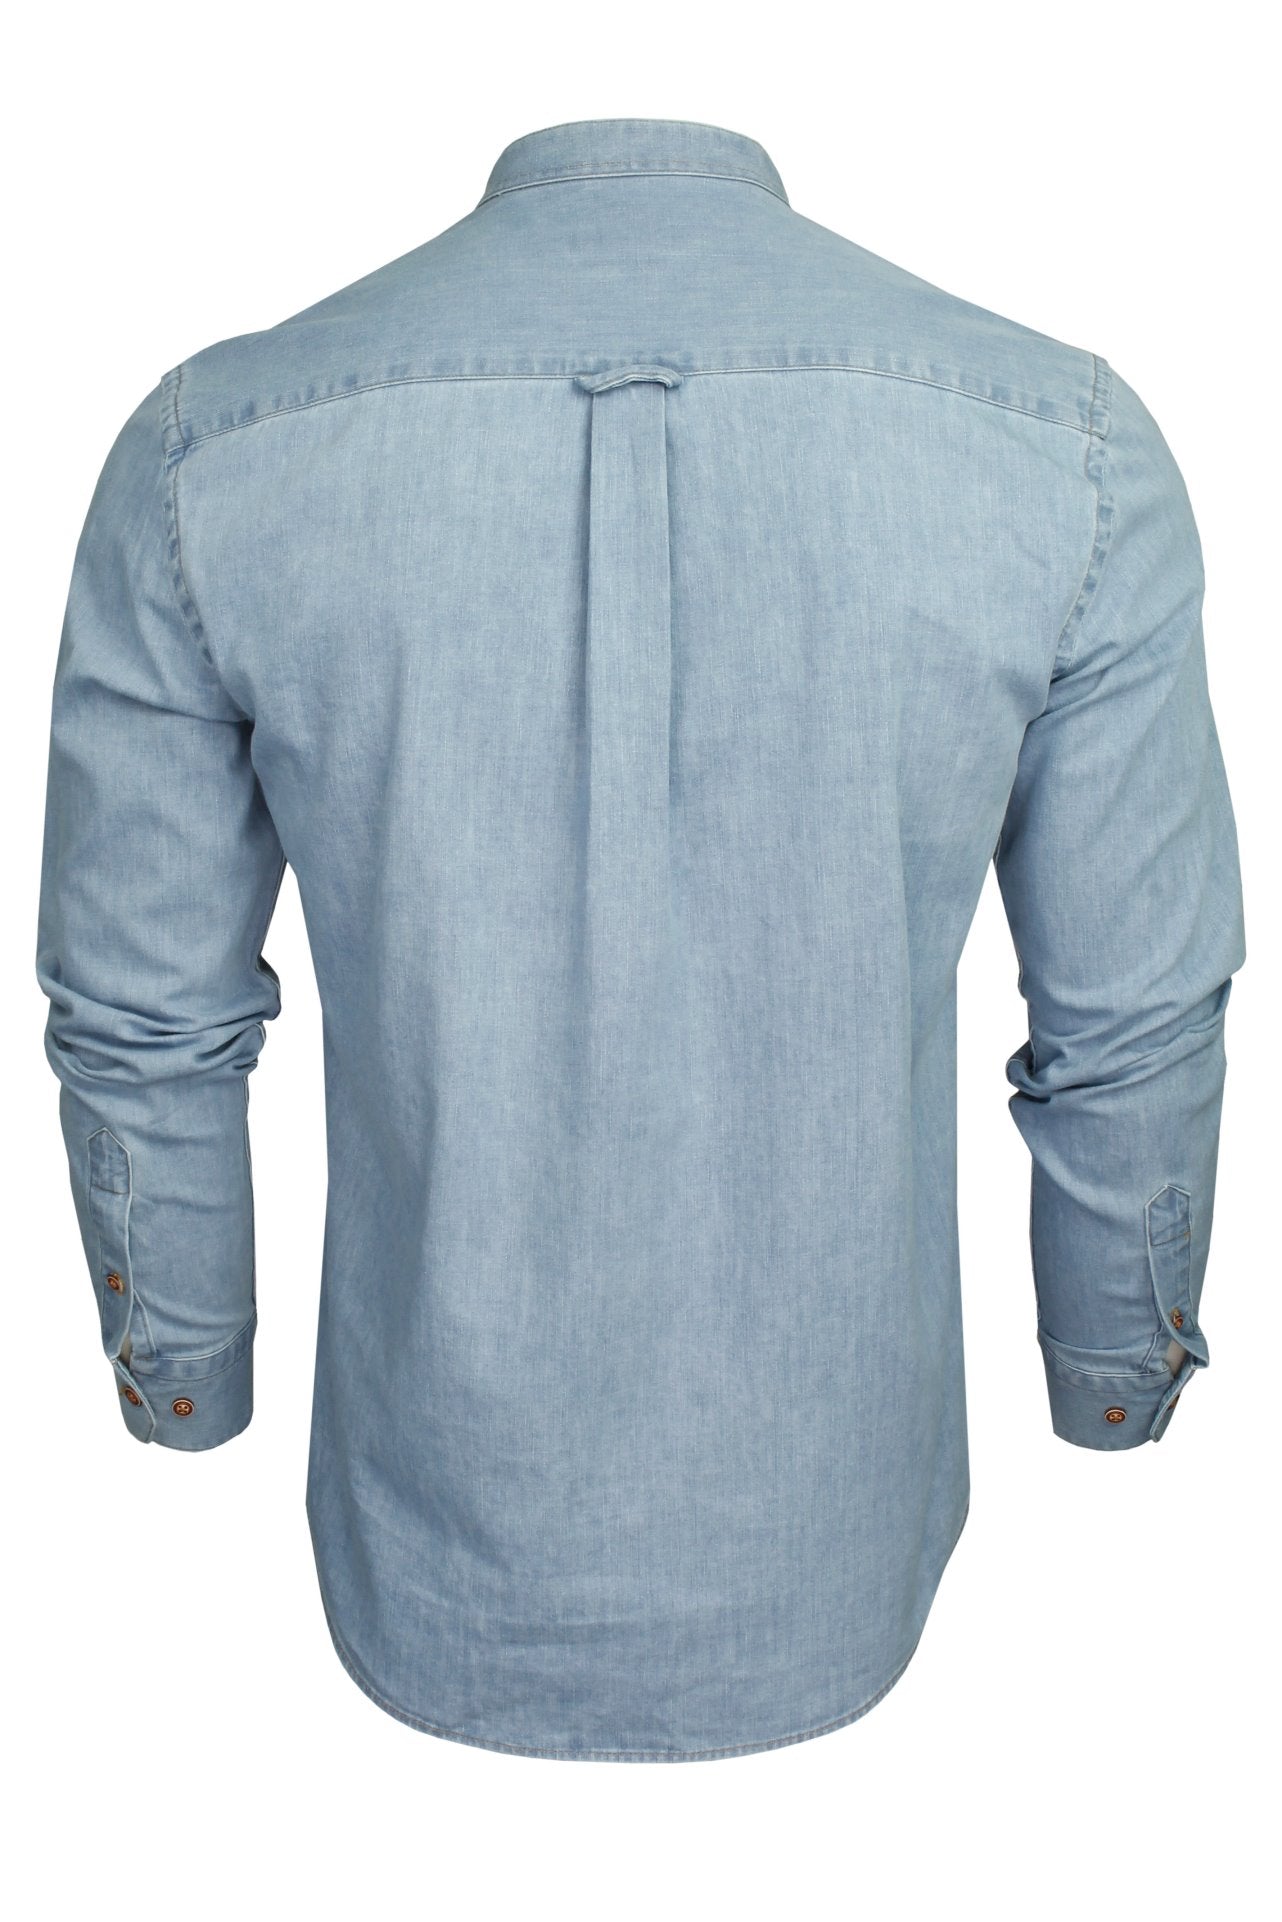 Xact Mens 6.6 oz Denim Band / Grandad Collar Shirt - Long Sleeved-3